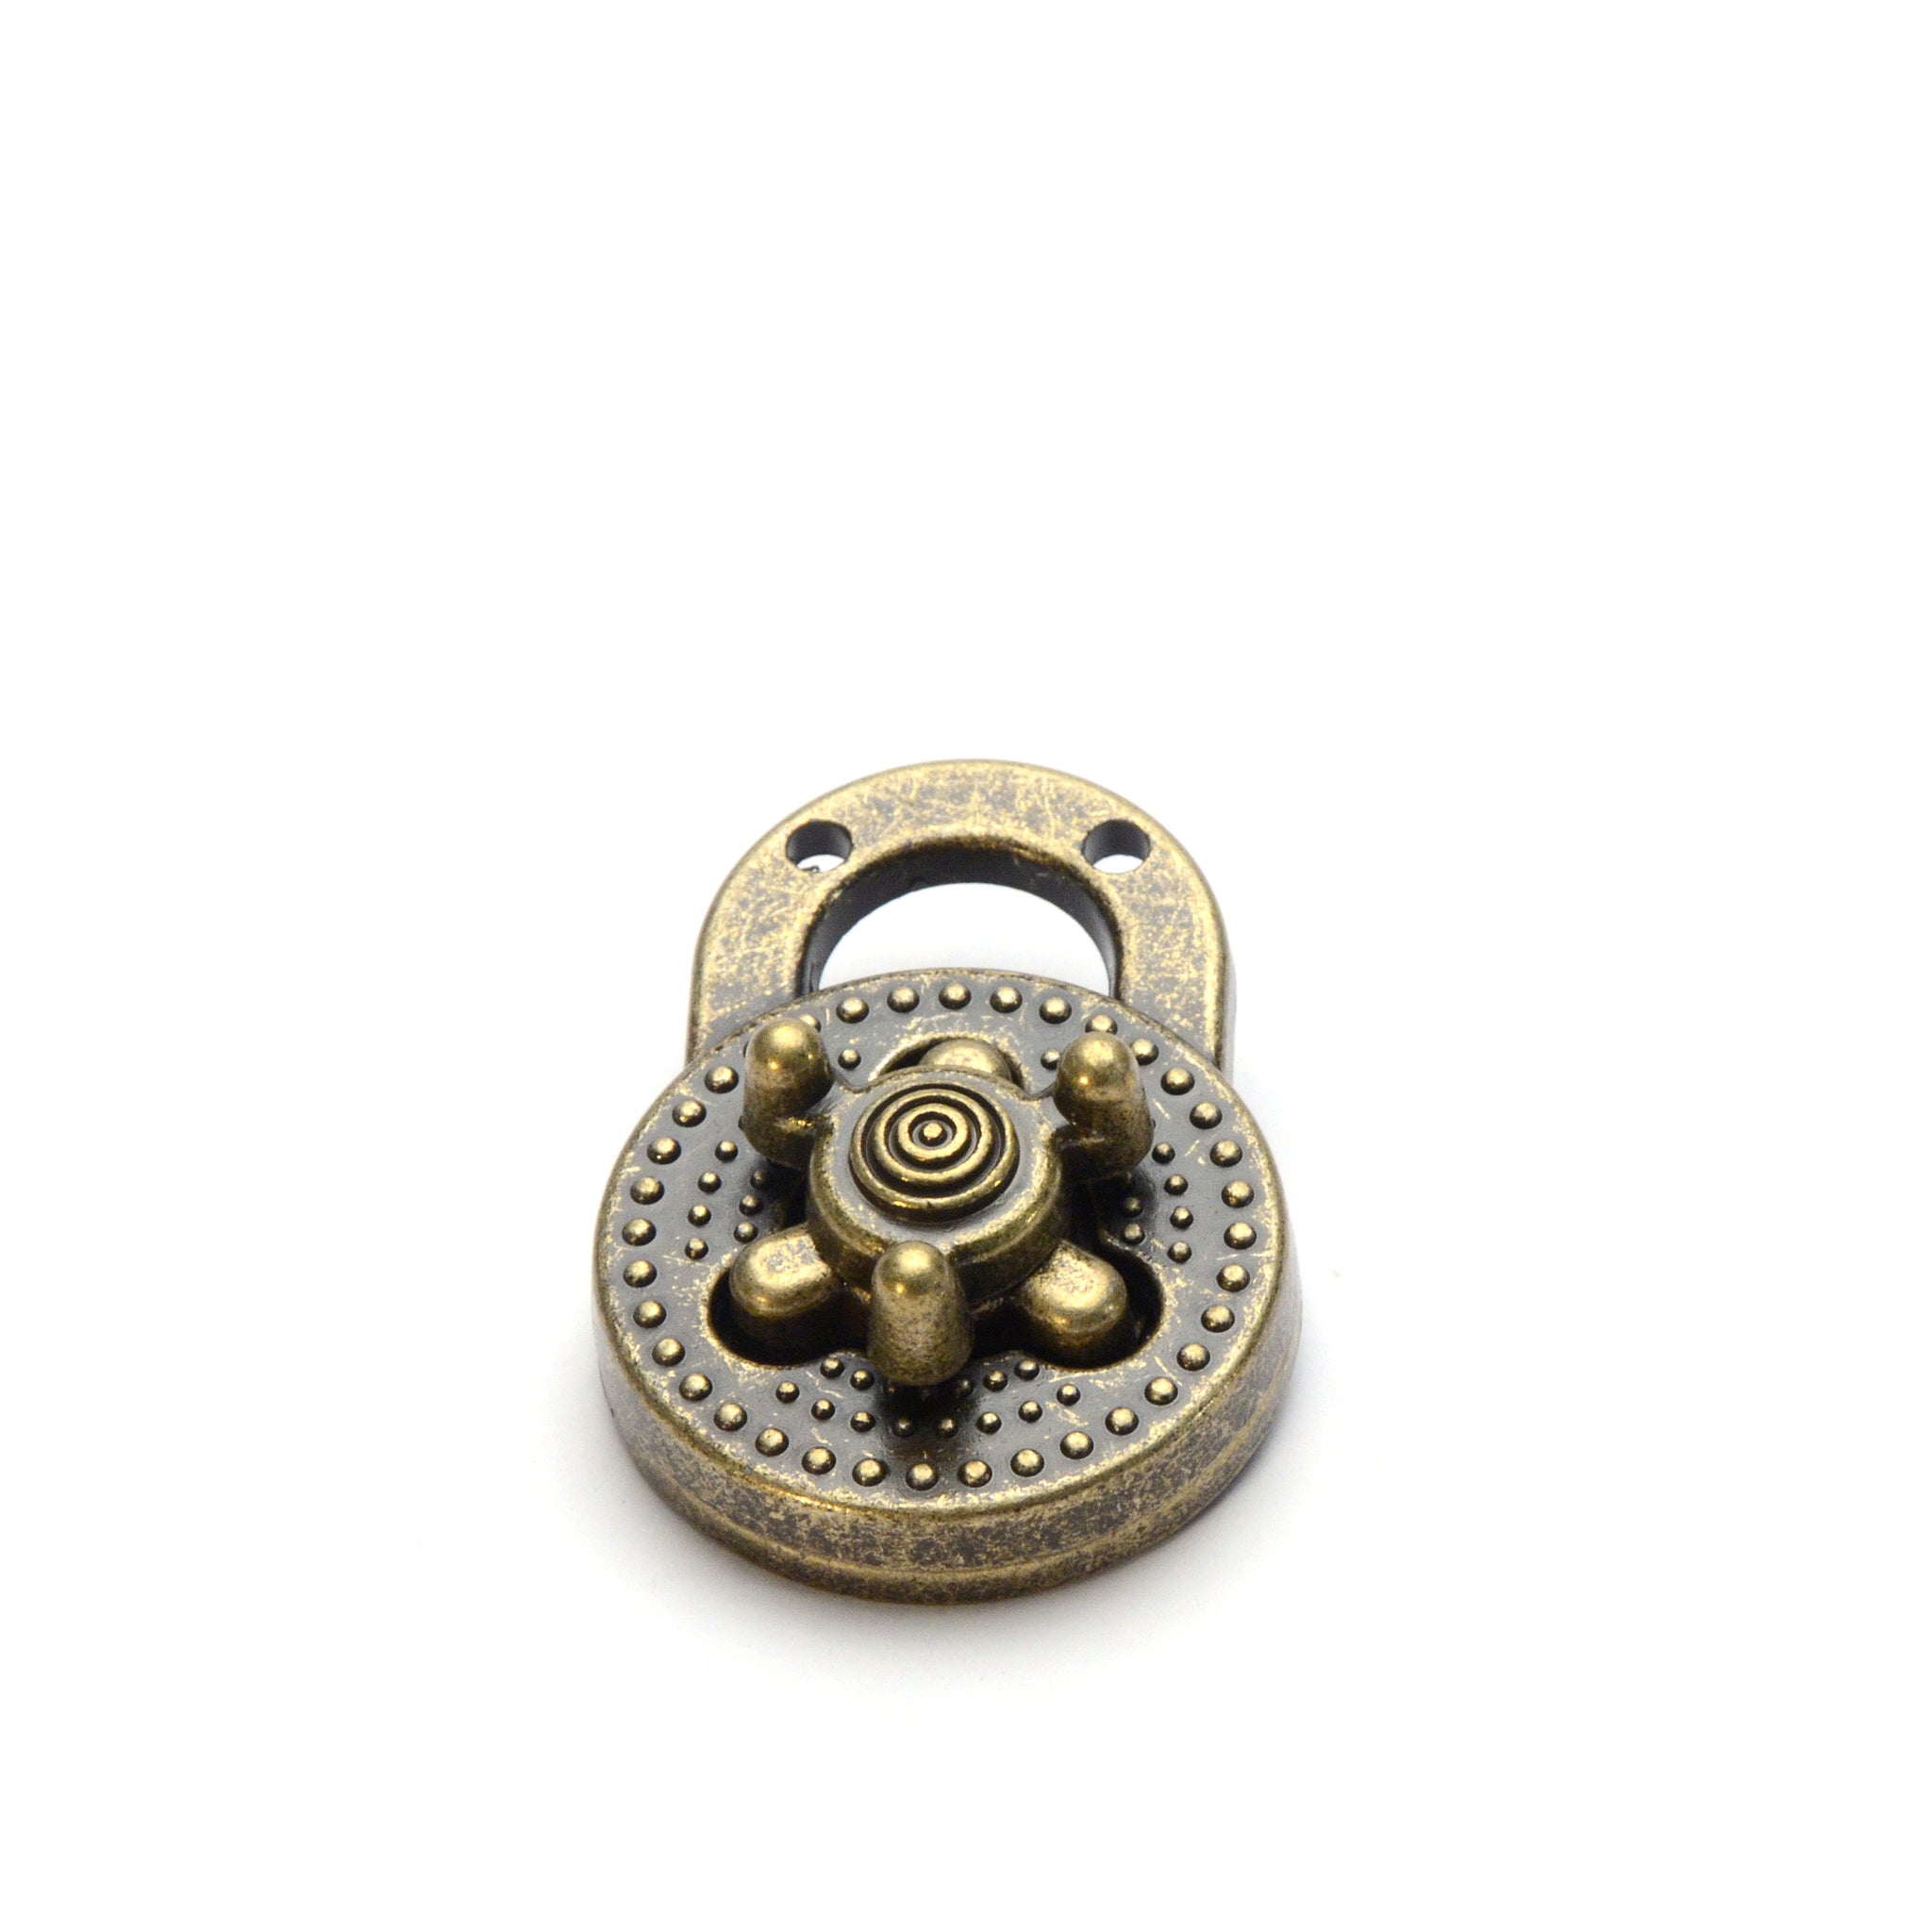 Antique Brass Love-Lock Turn Clasp from Identity Leathercraft